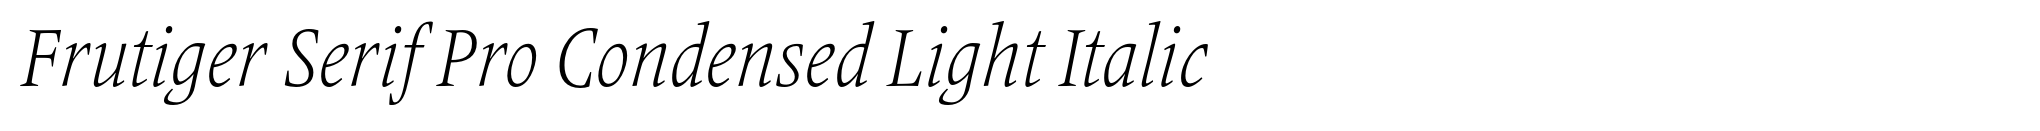 Frutiger Serif Pro Condensed Light Italic image